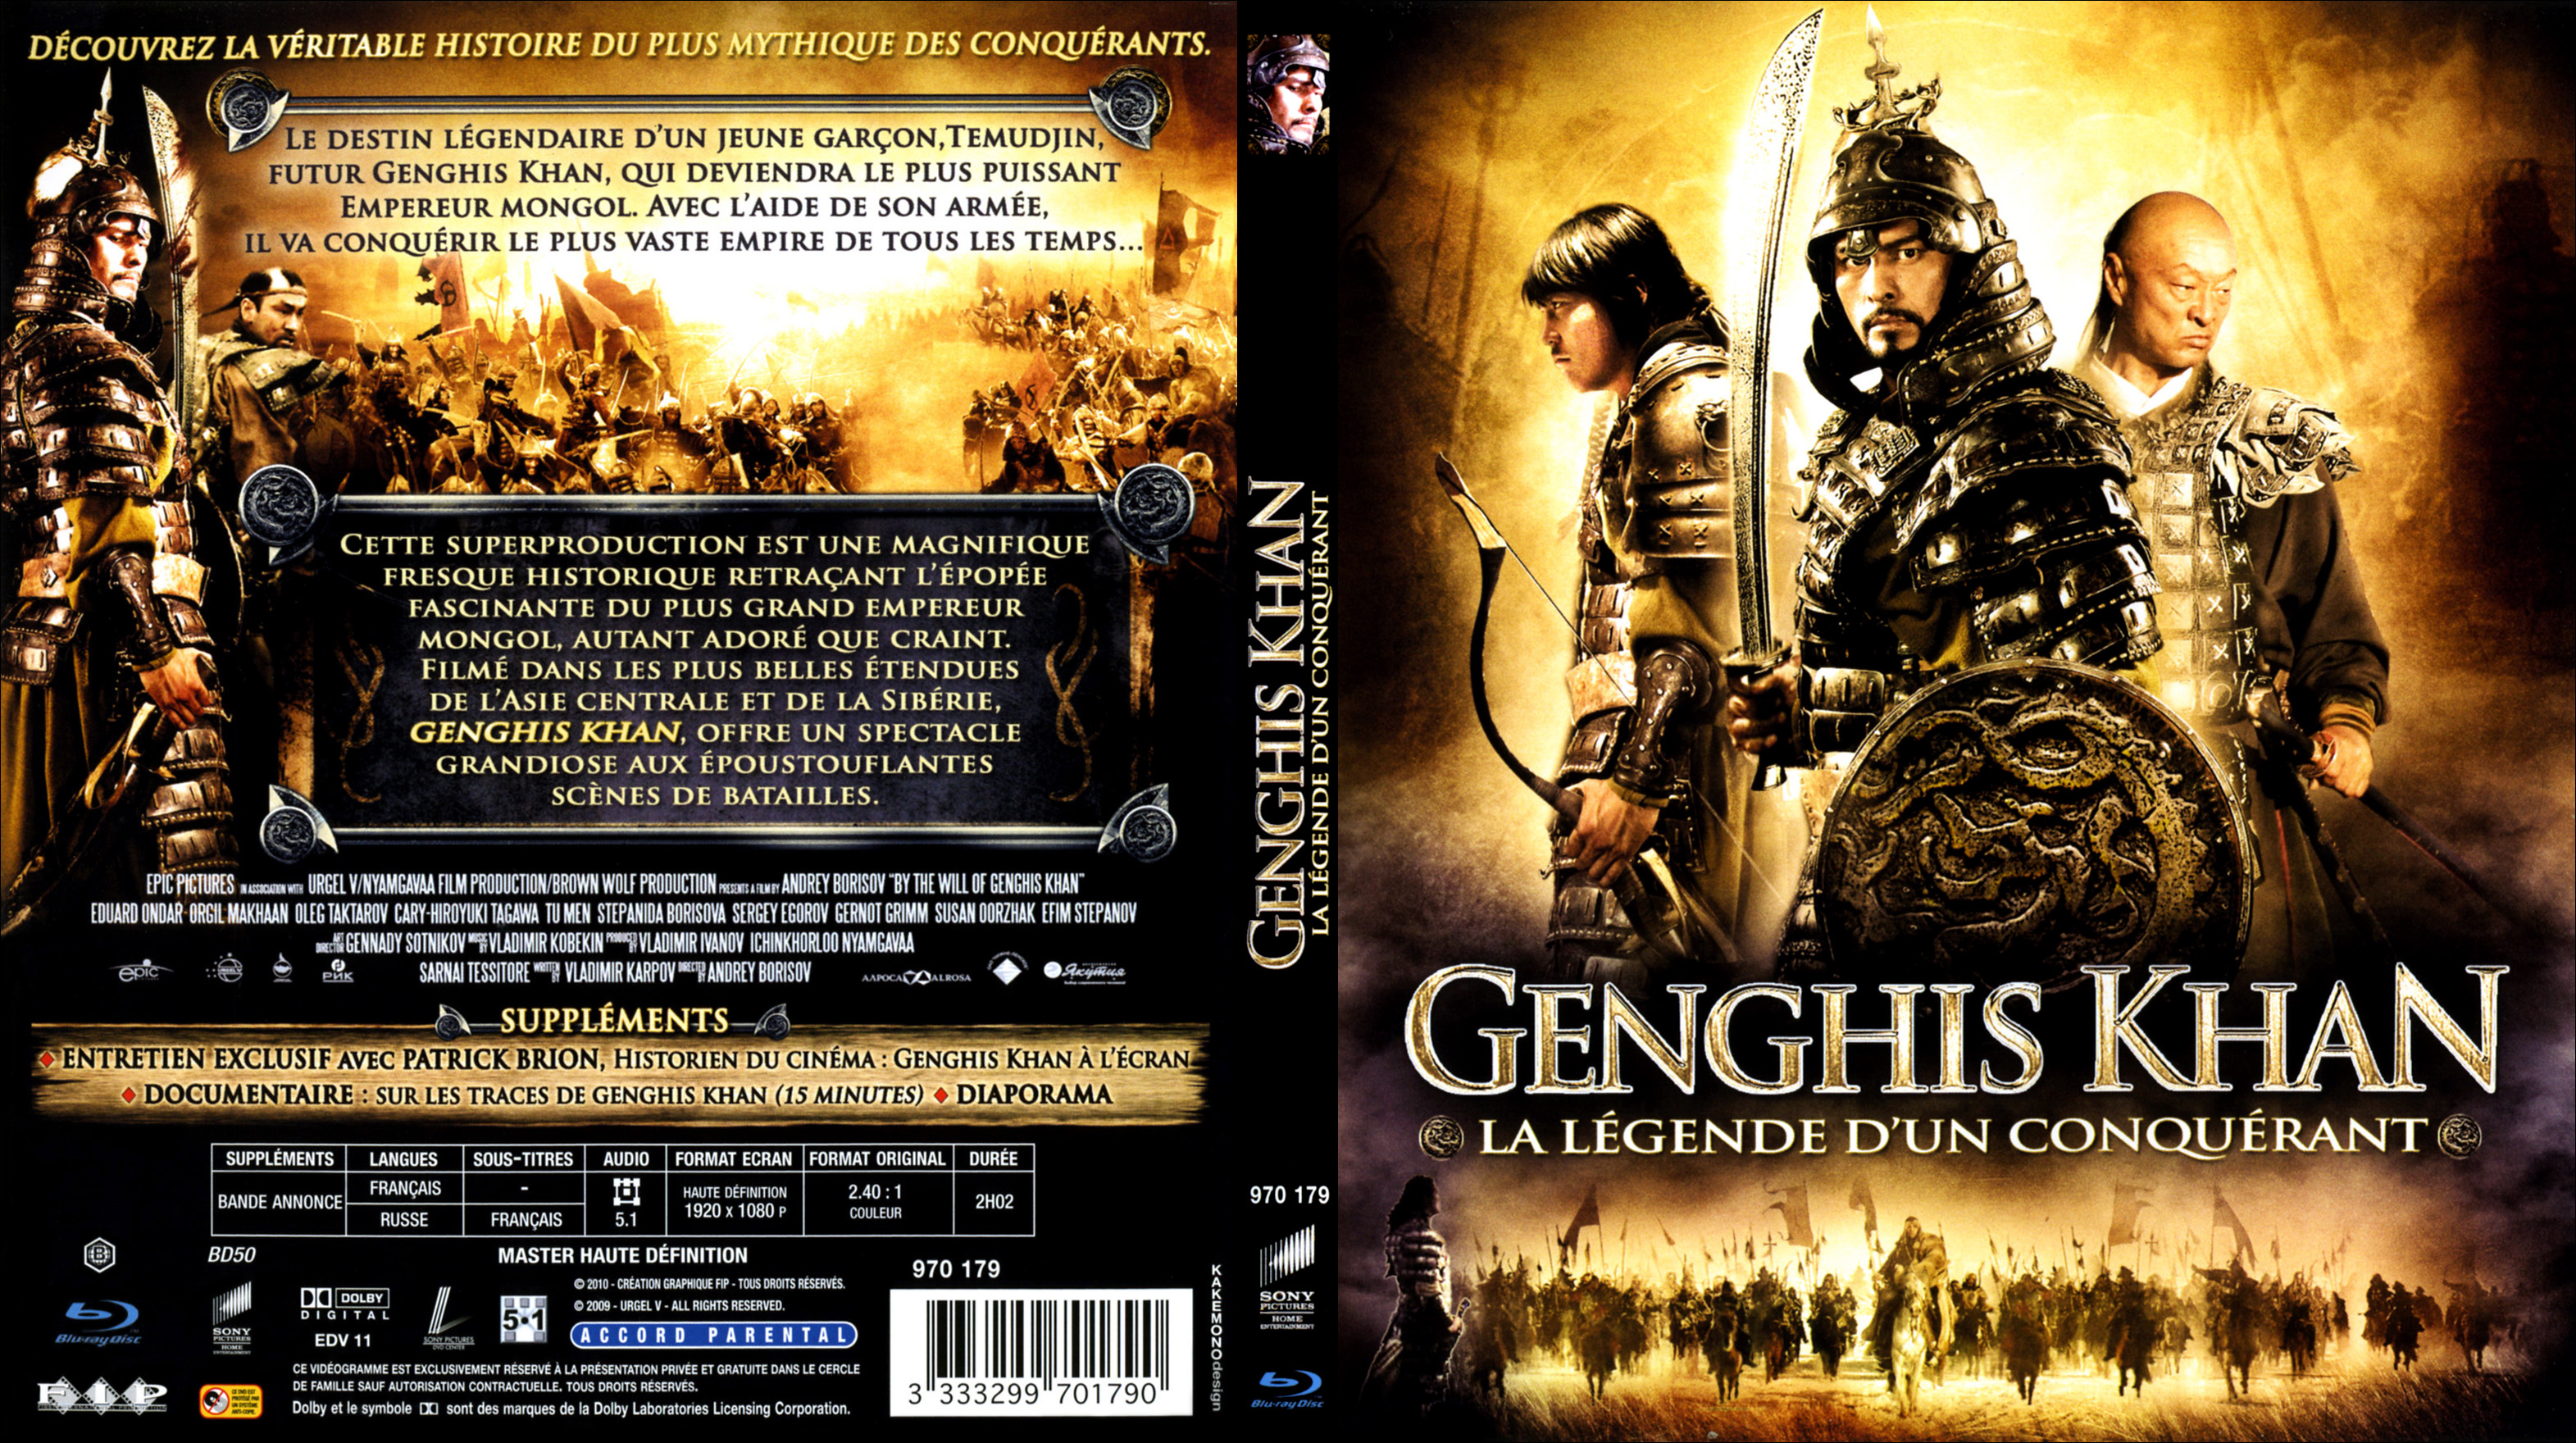 Jaquette DVD Genghis Khan (BLU-RAY)